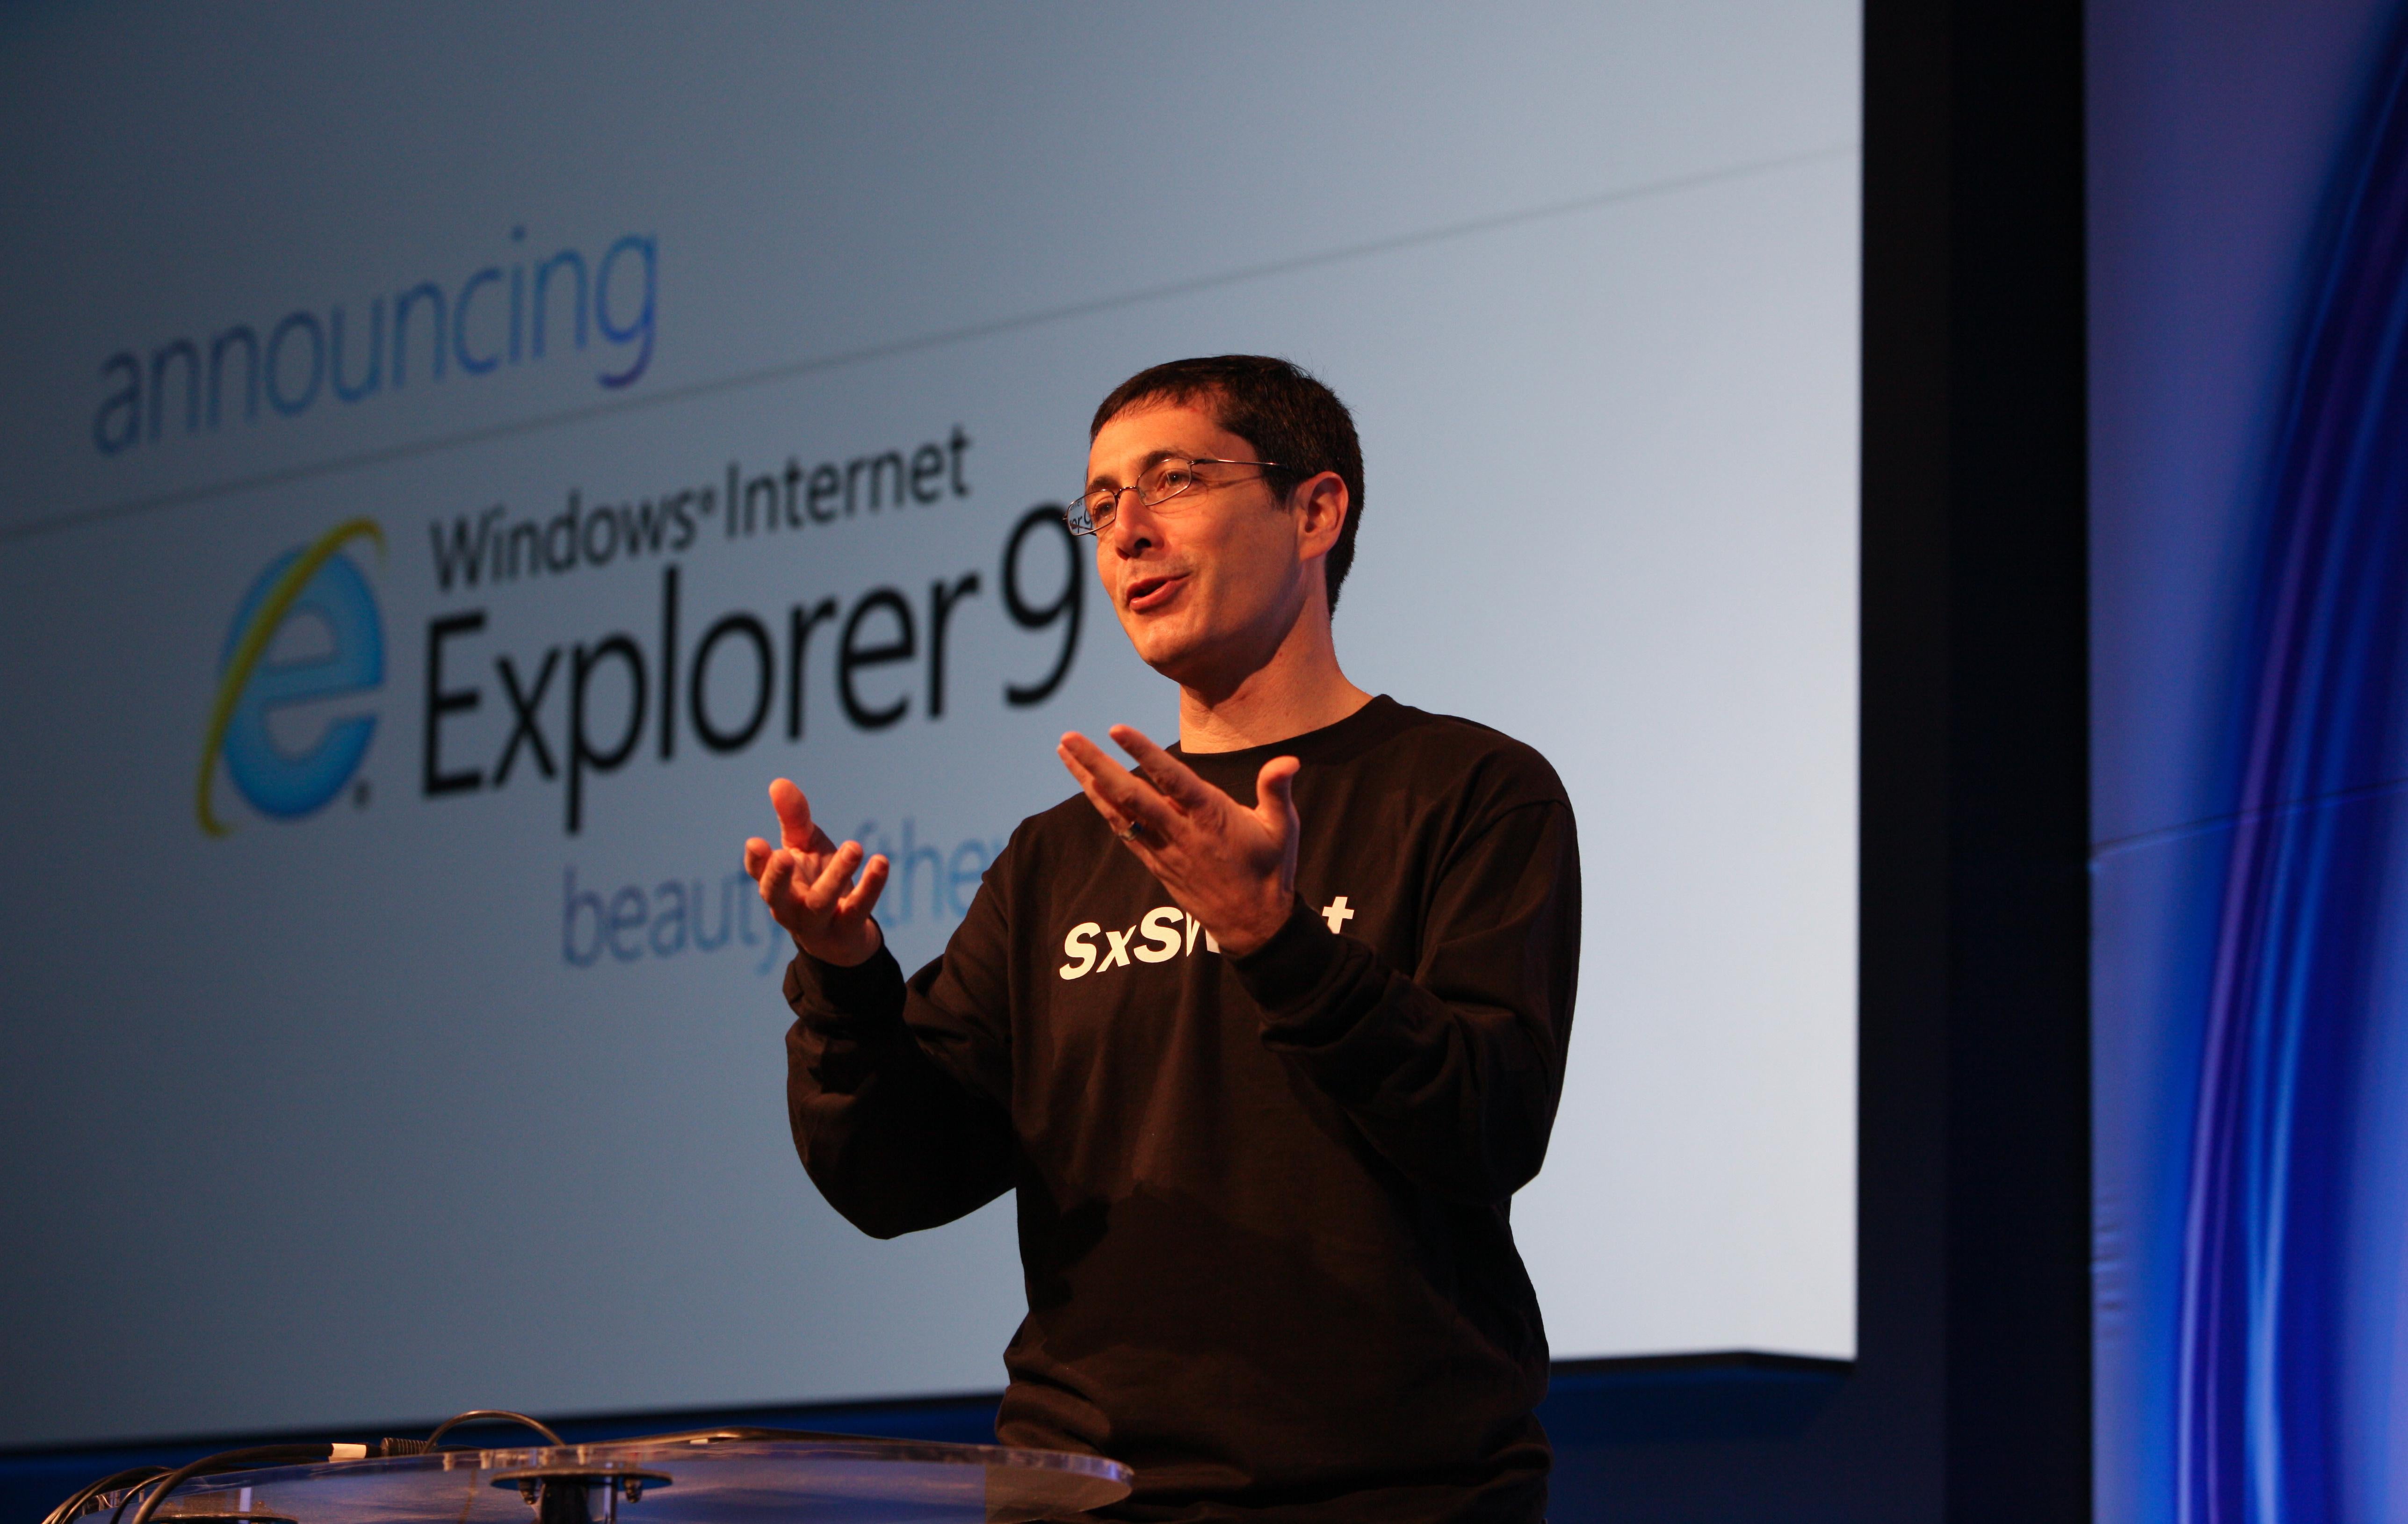 Dean Hachamovitch, Microsoft corporate vice president of Internet Explorer